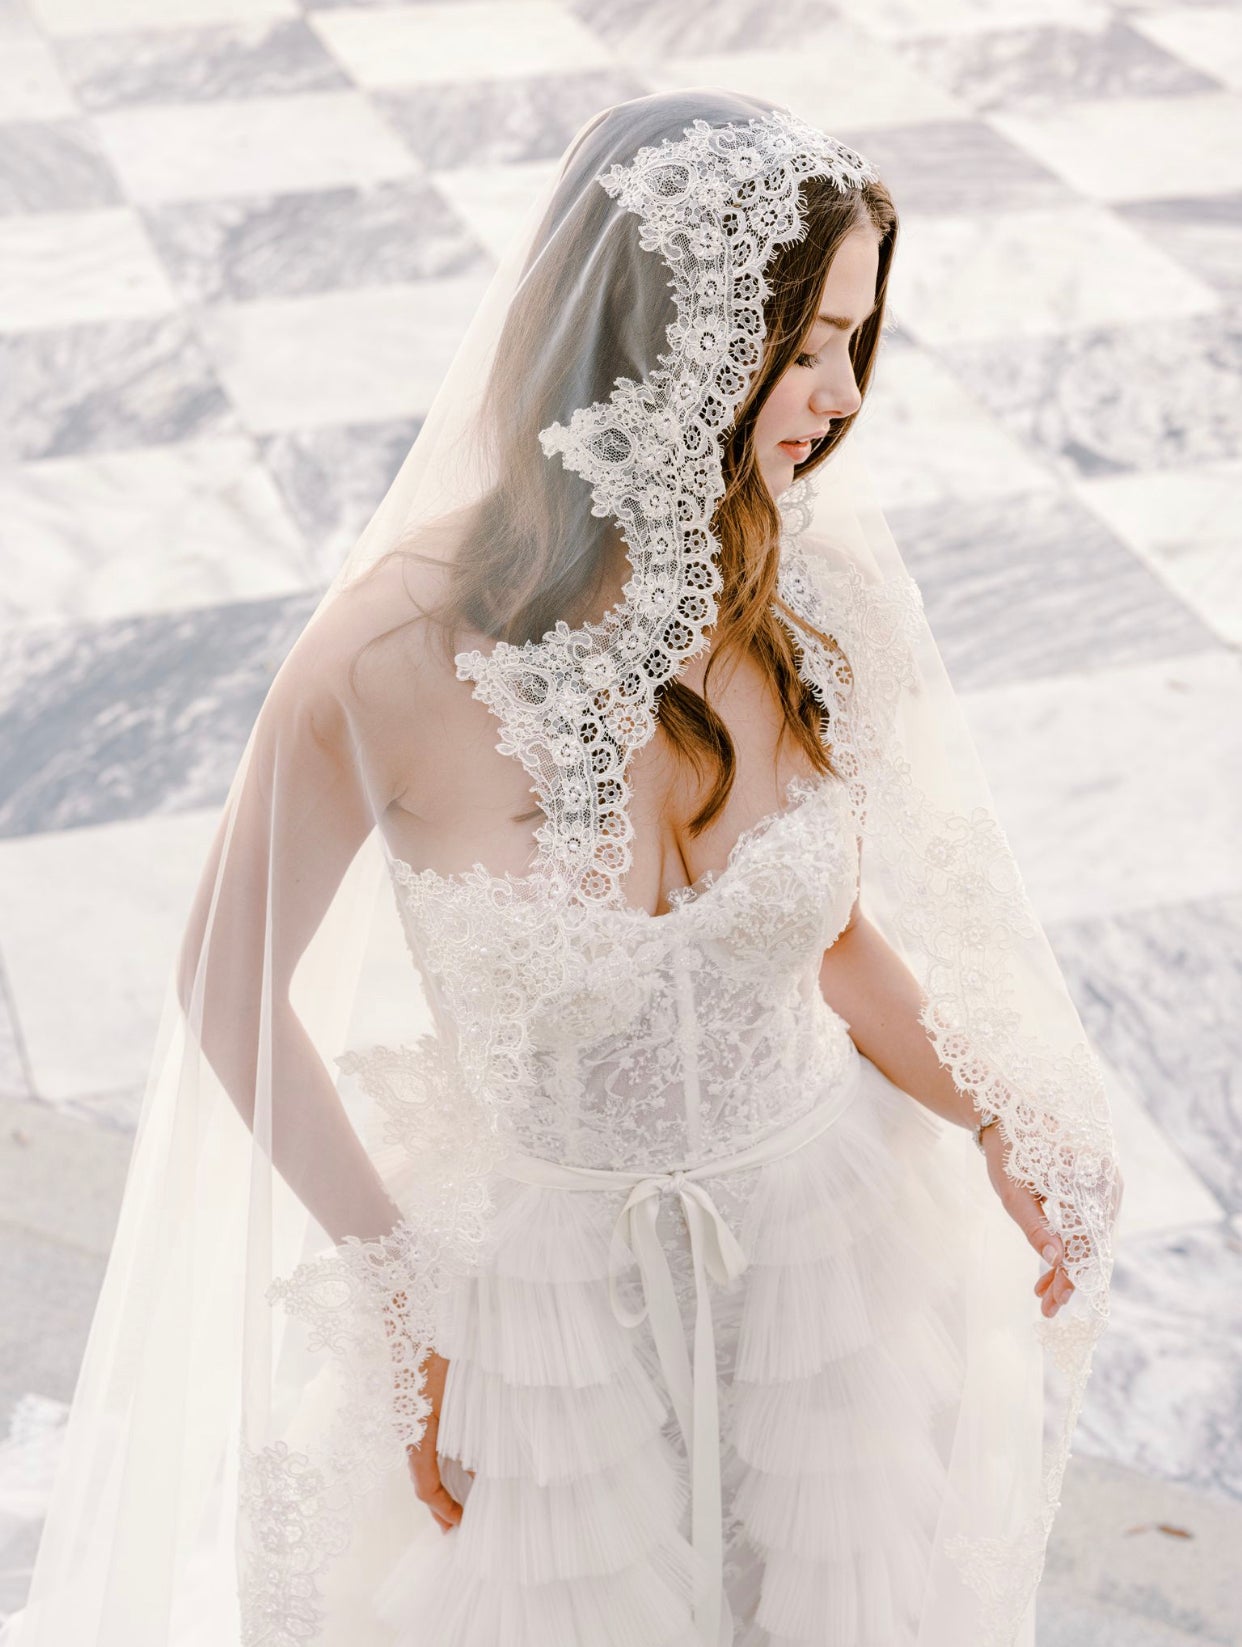 Selecting the Perfect Bridal Veil